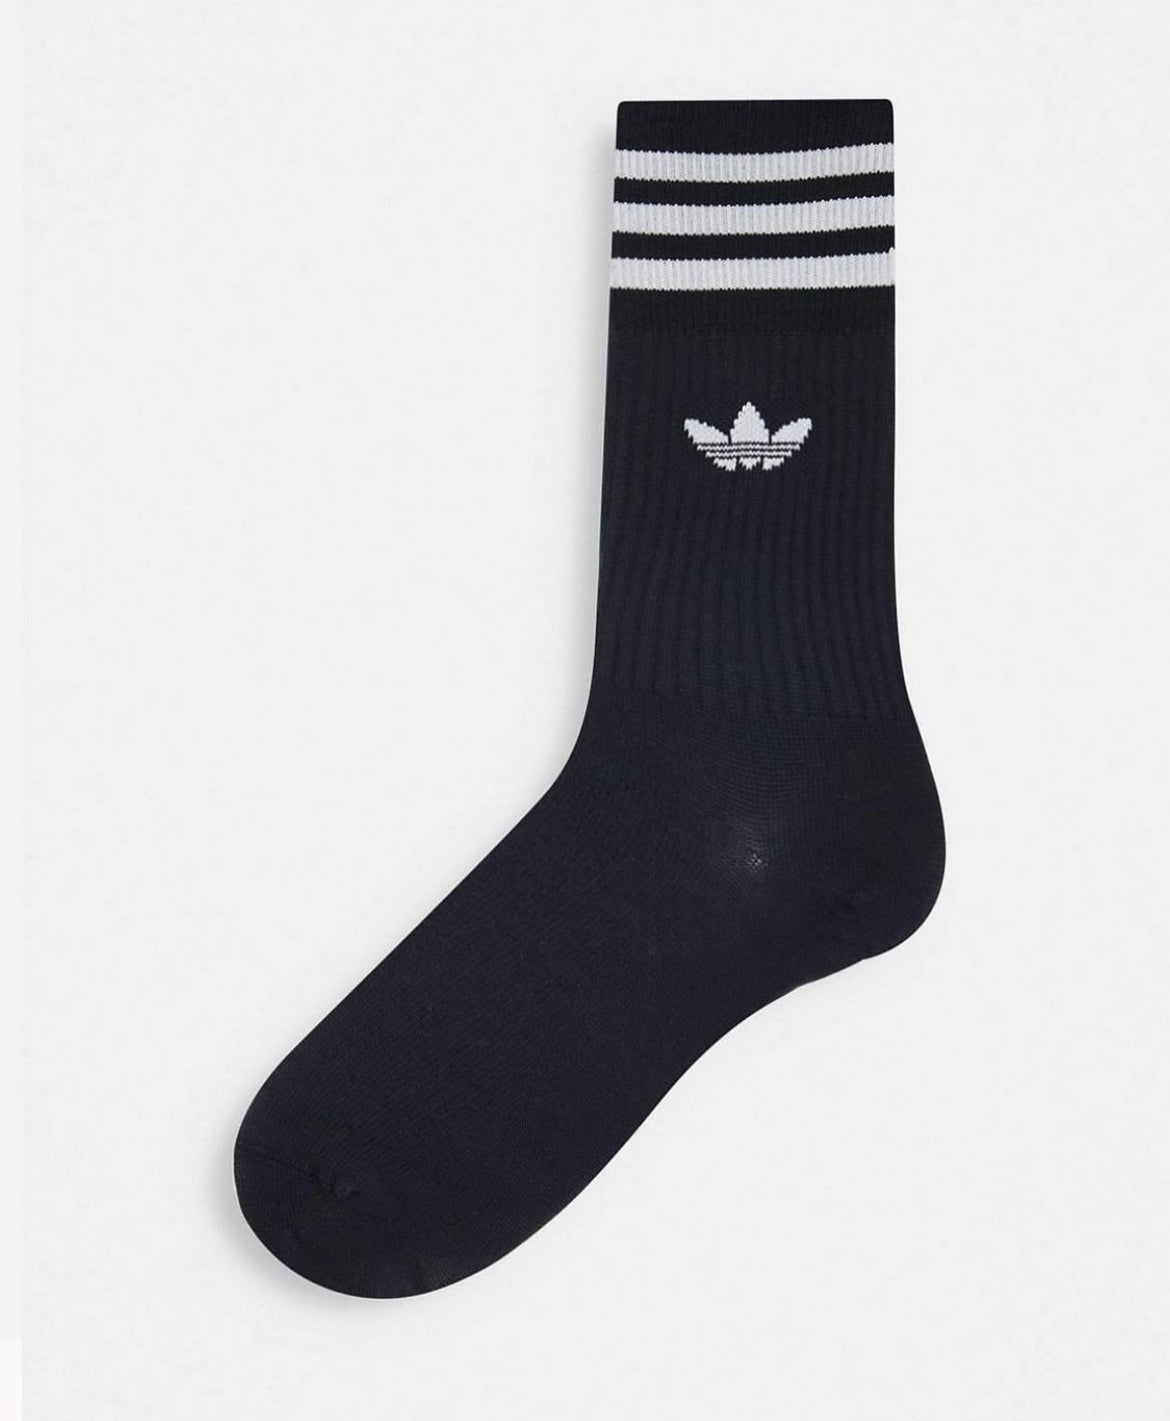 Adidas crew socks black